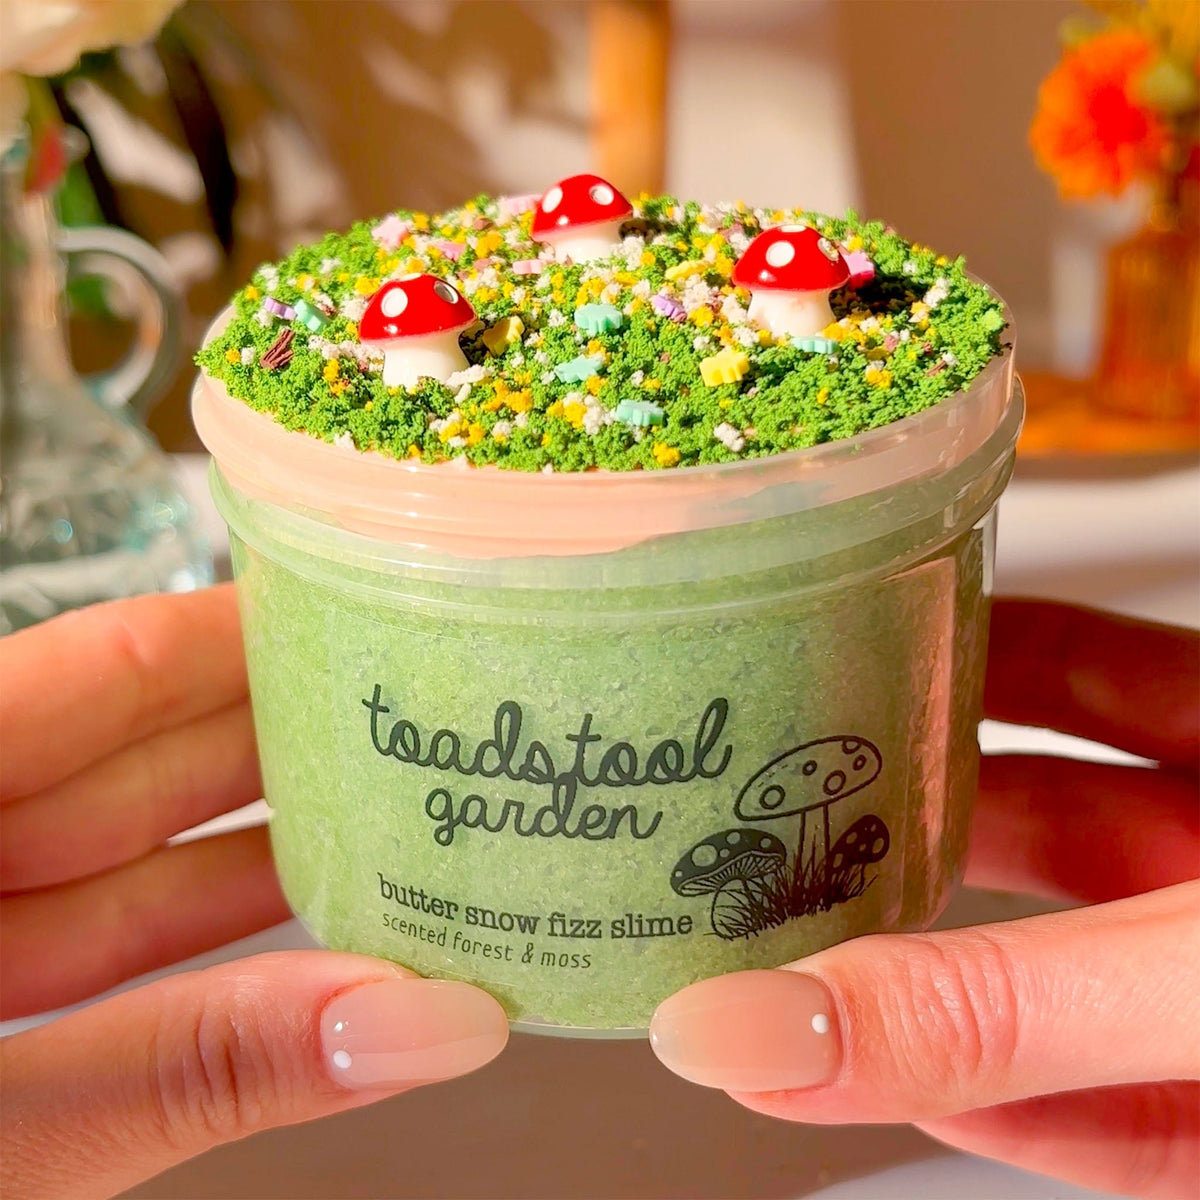 Toadstool Garden Cottagecore Cute Crunchy Mushroom Slime Fantasies Shop 9oz Front View Hands